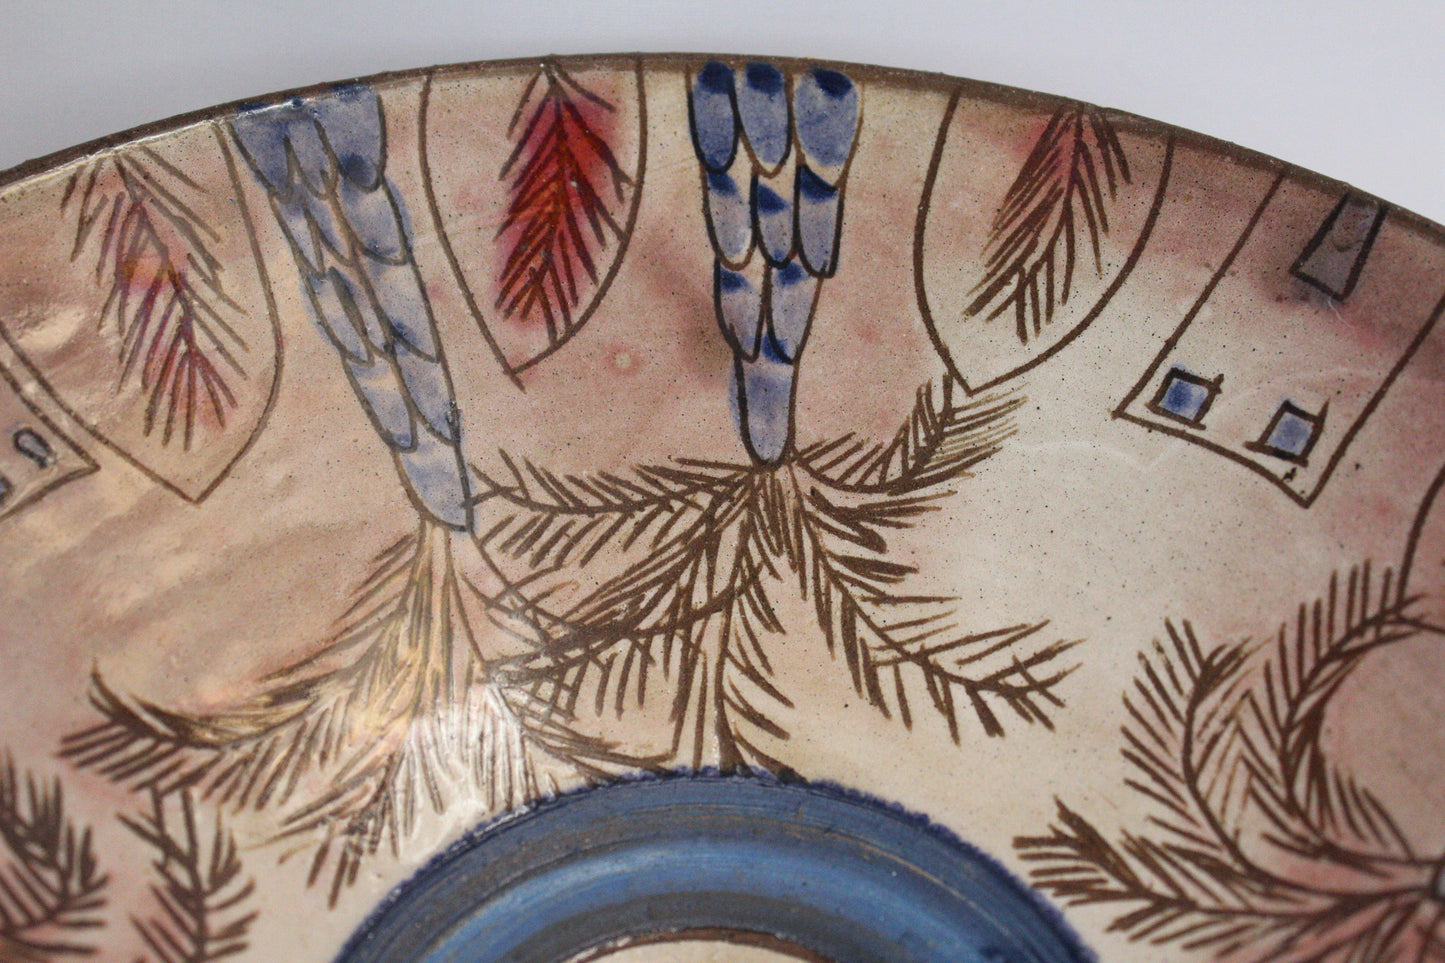 Handmade Pottery Bowl - Palm Trees